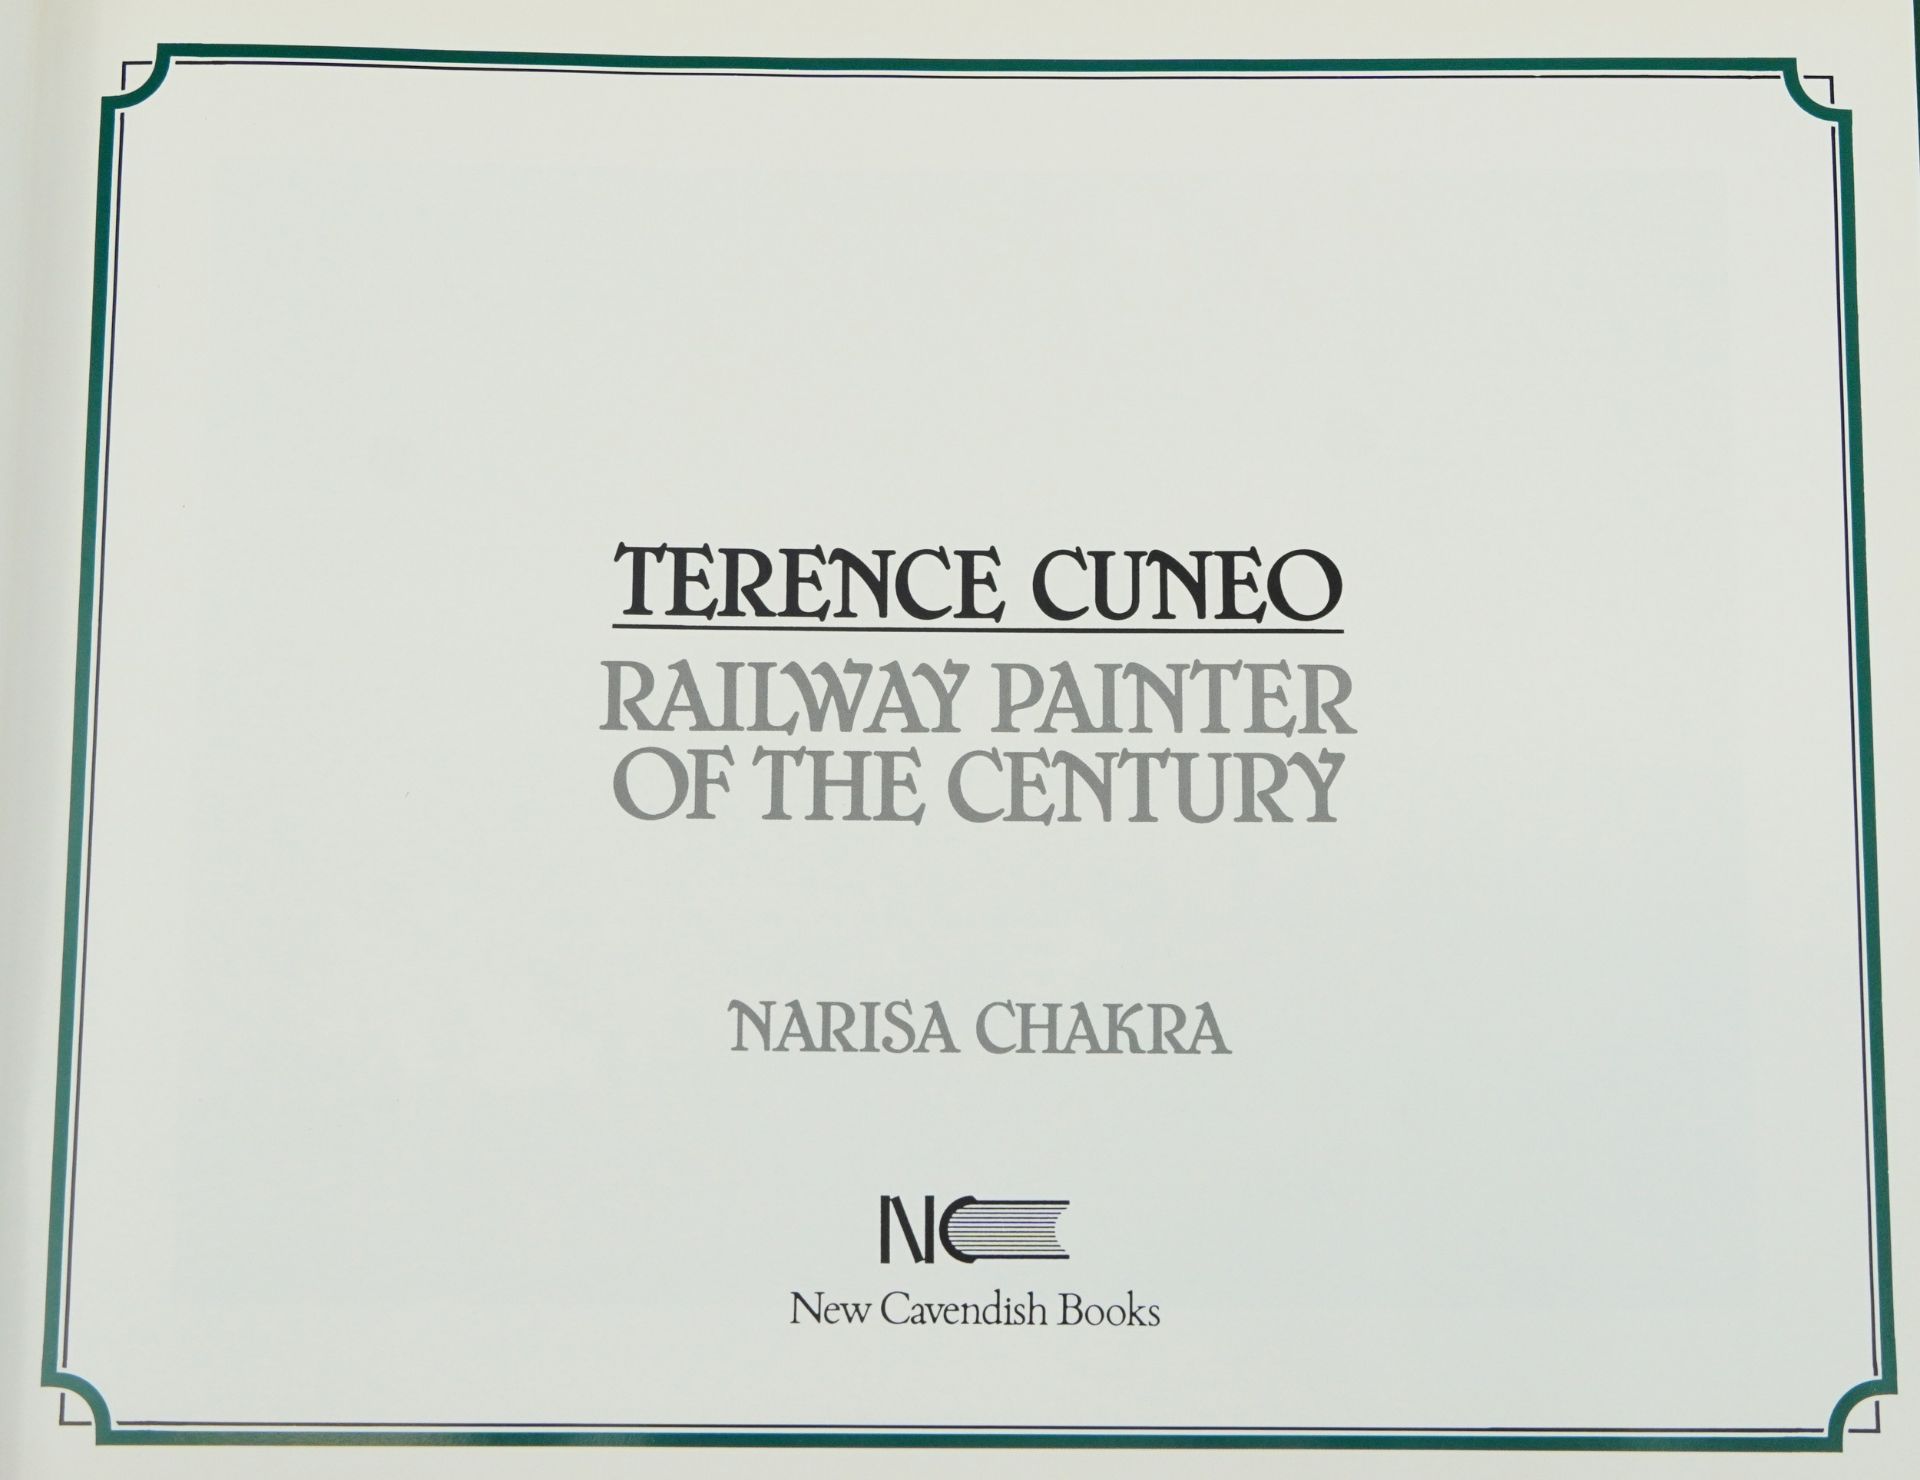 Terence Cuneo Railway Painter of the Century Narisa Chakra, New Cavendish Books - Image 2 of 3